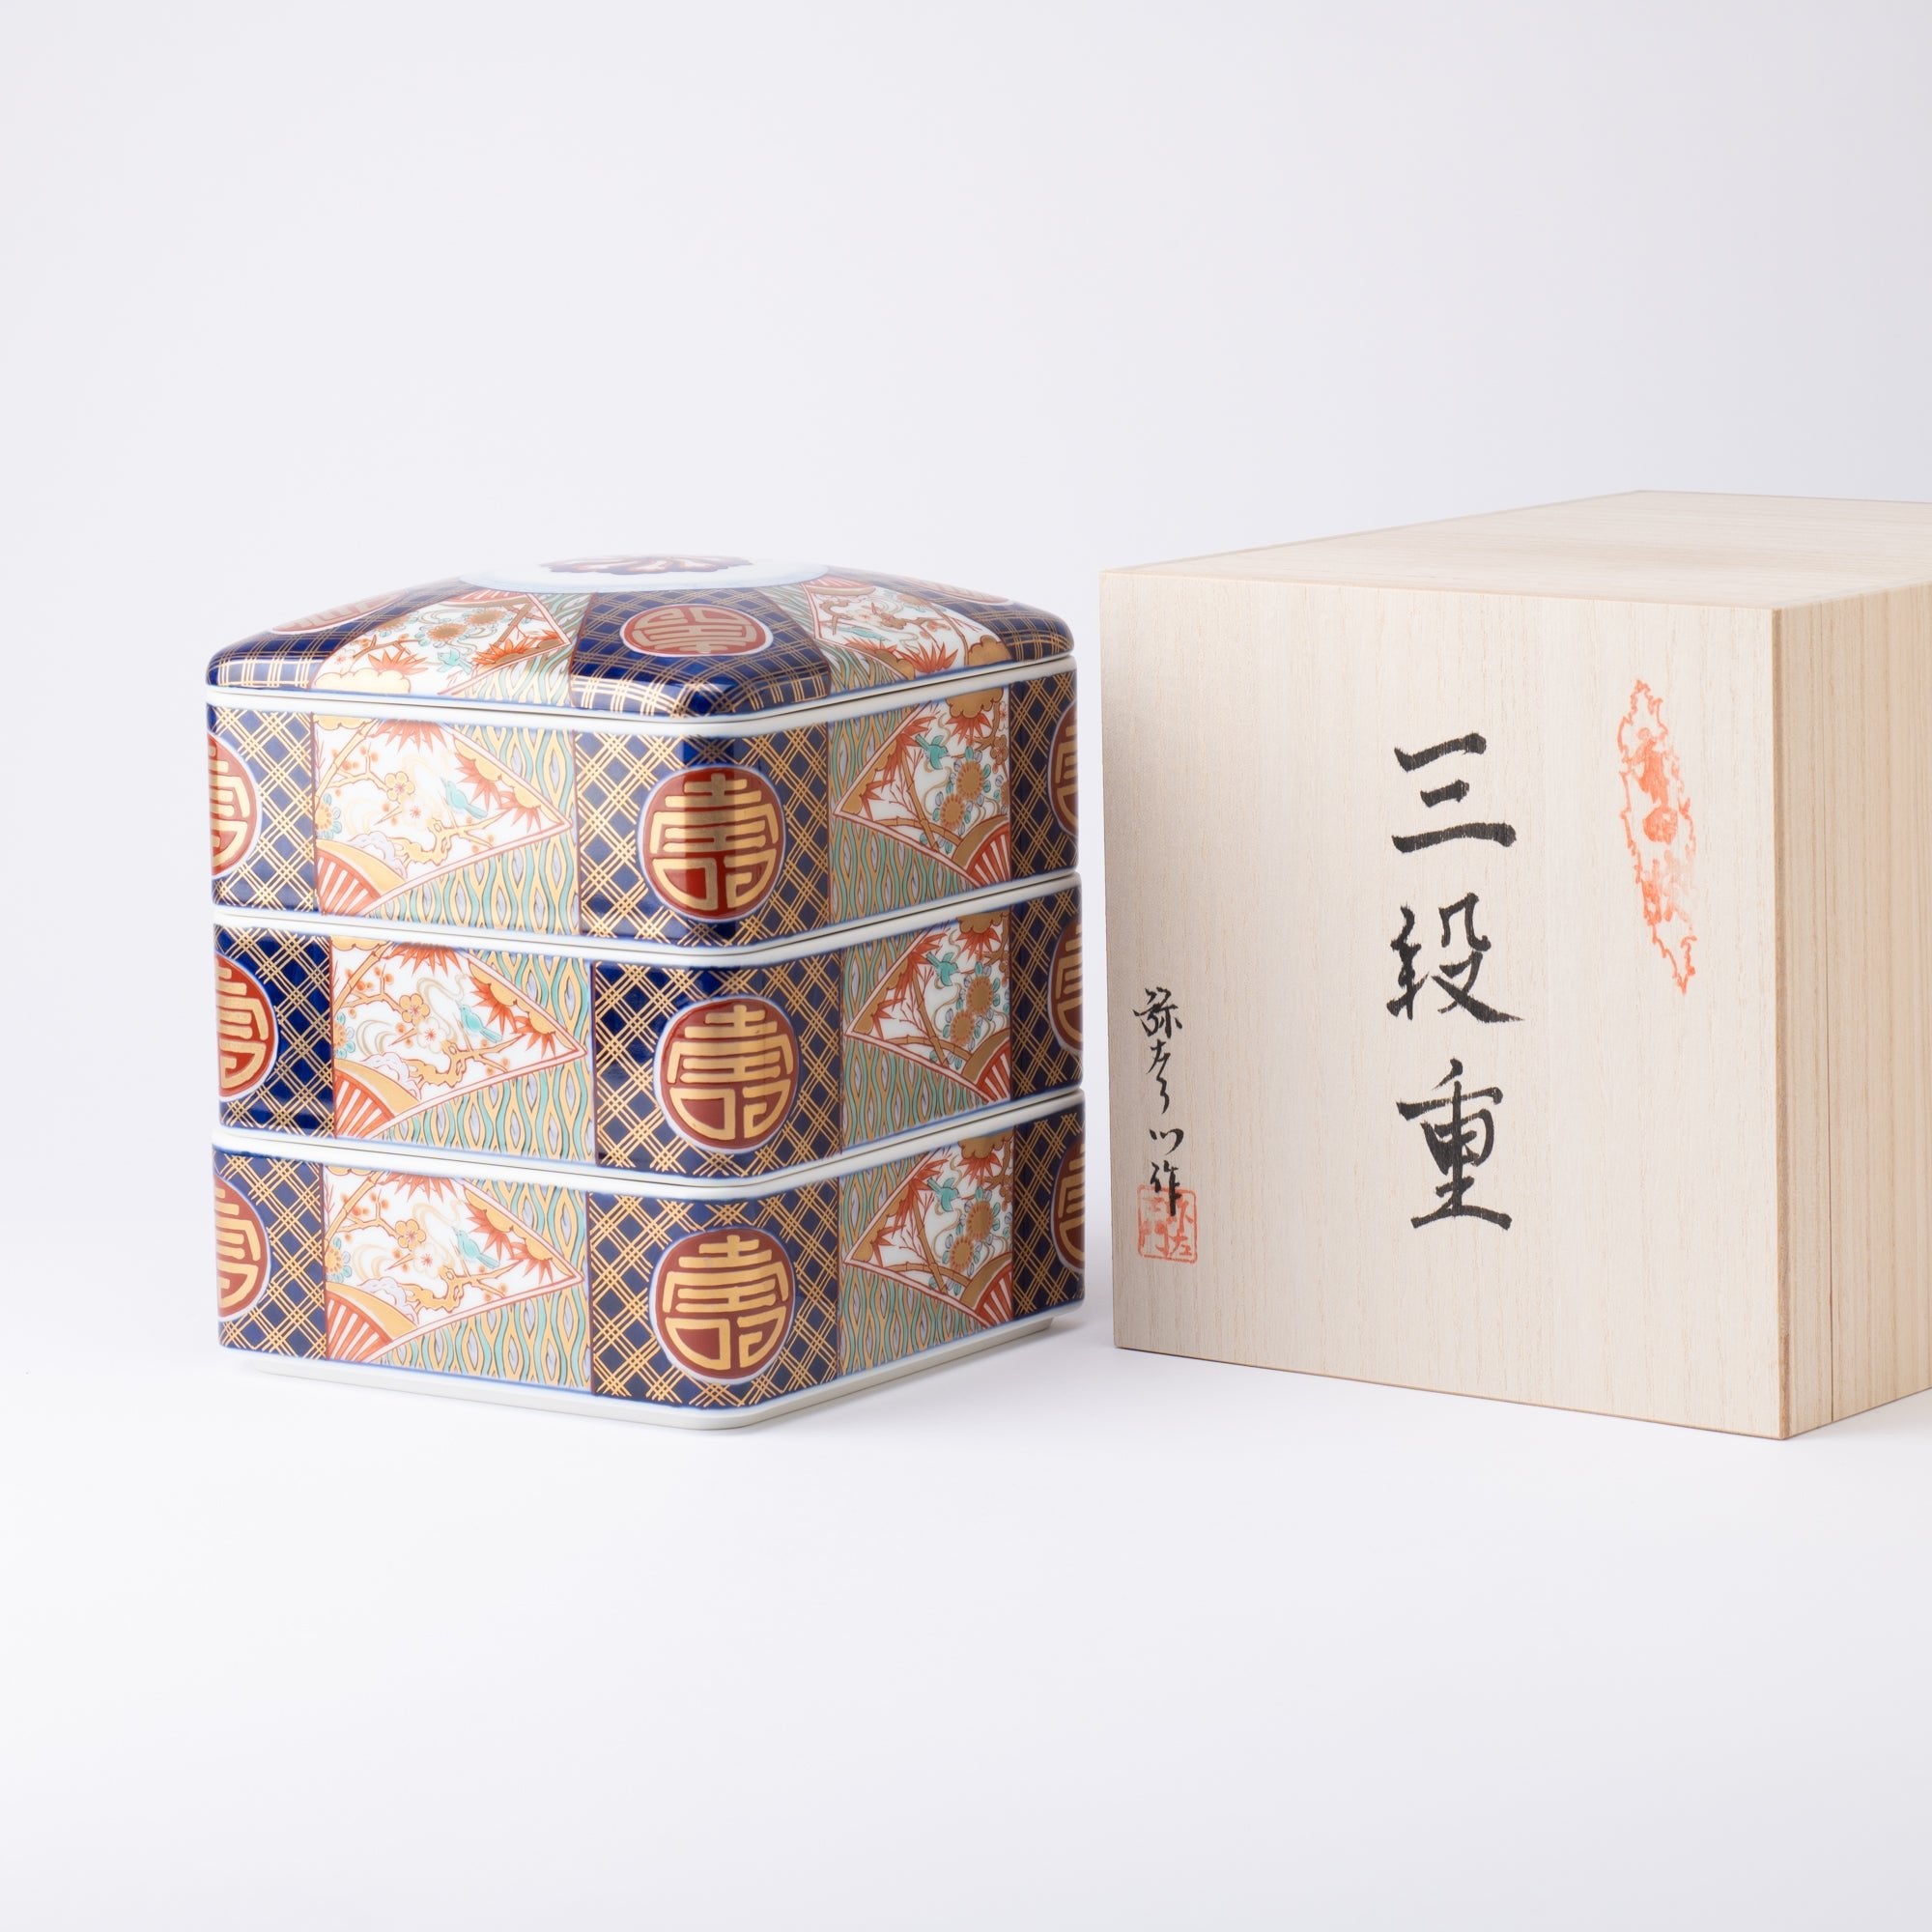 HAKOYA Lunch Bento Box 06040 Mini Nest of Boxes Black Flower Raft MADE IN JAPAN 